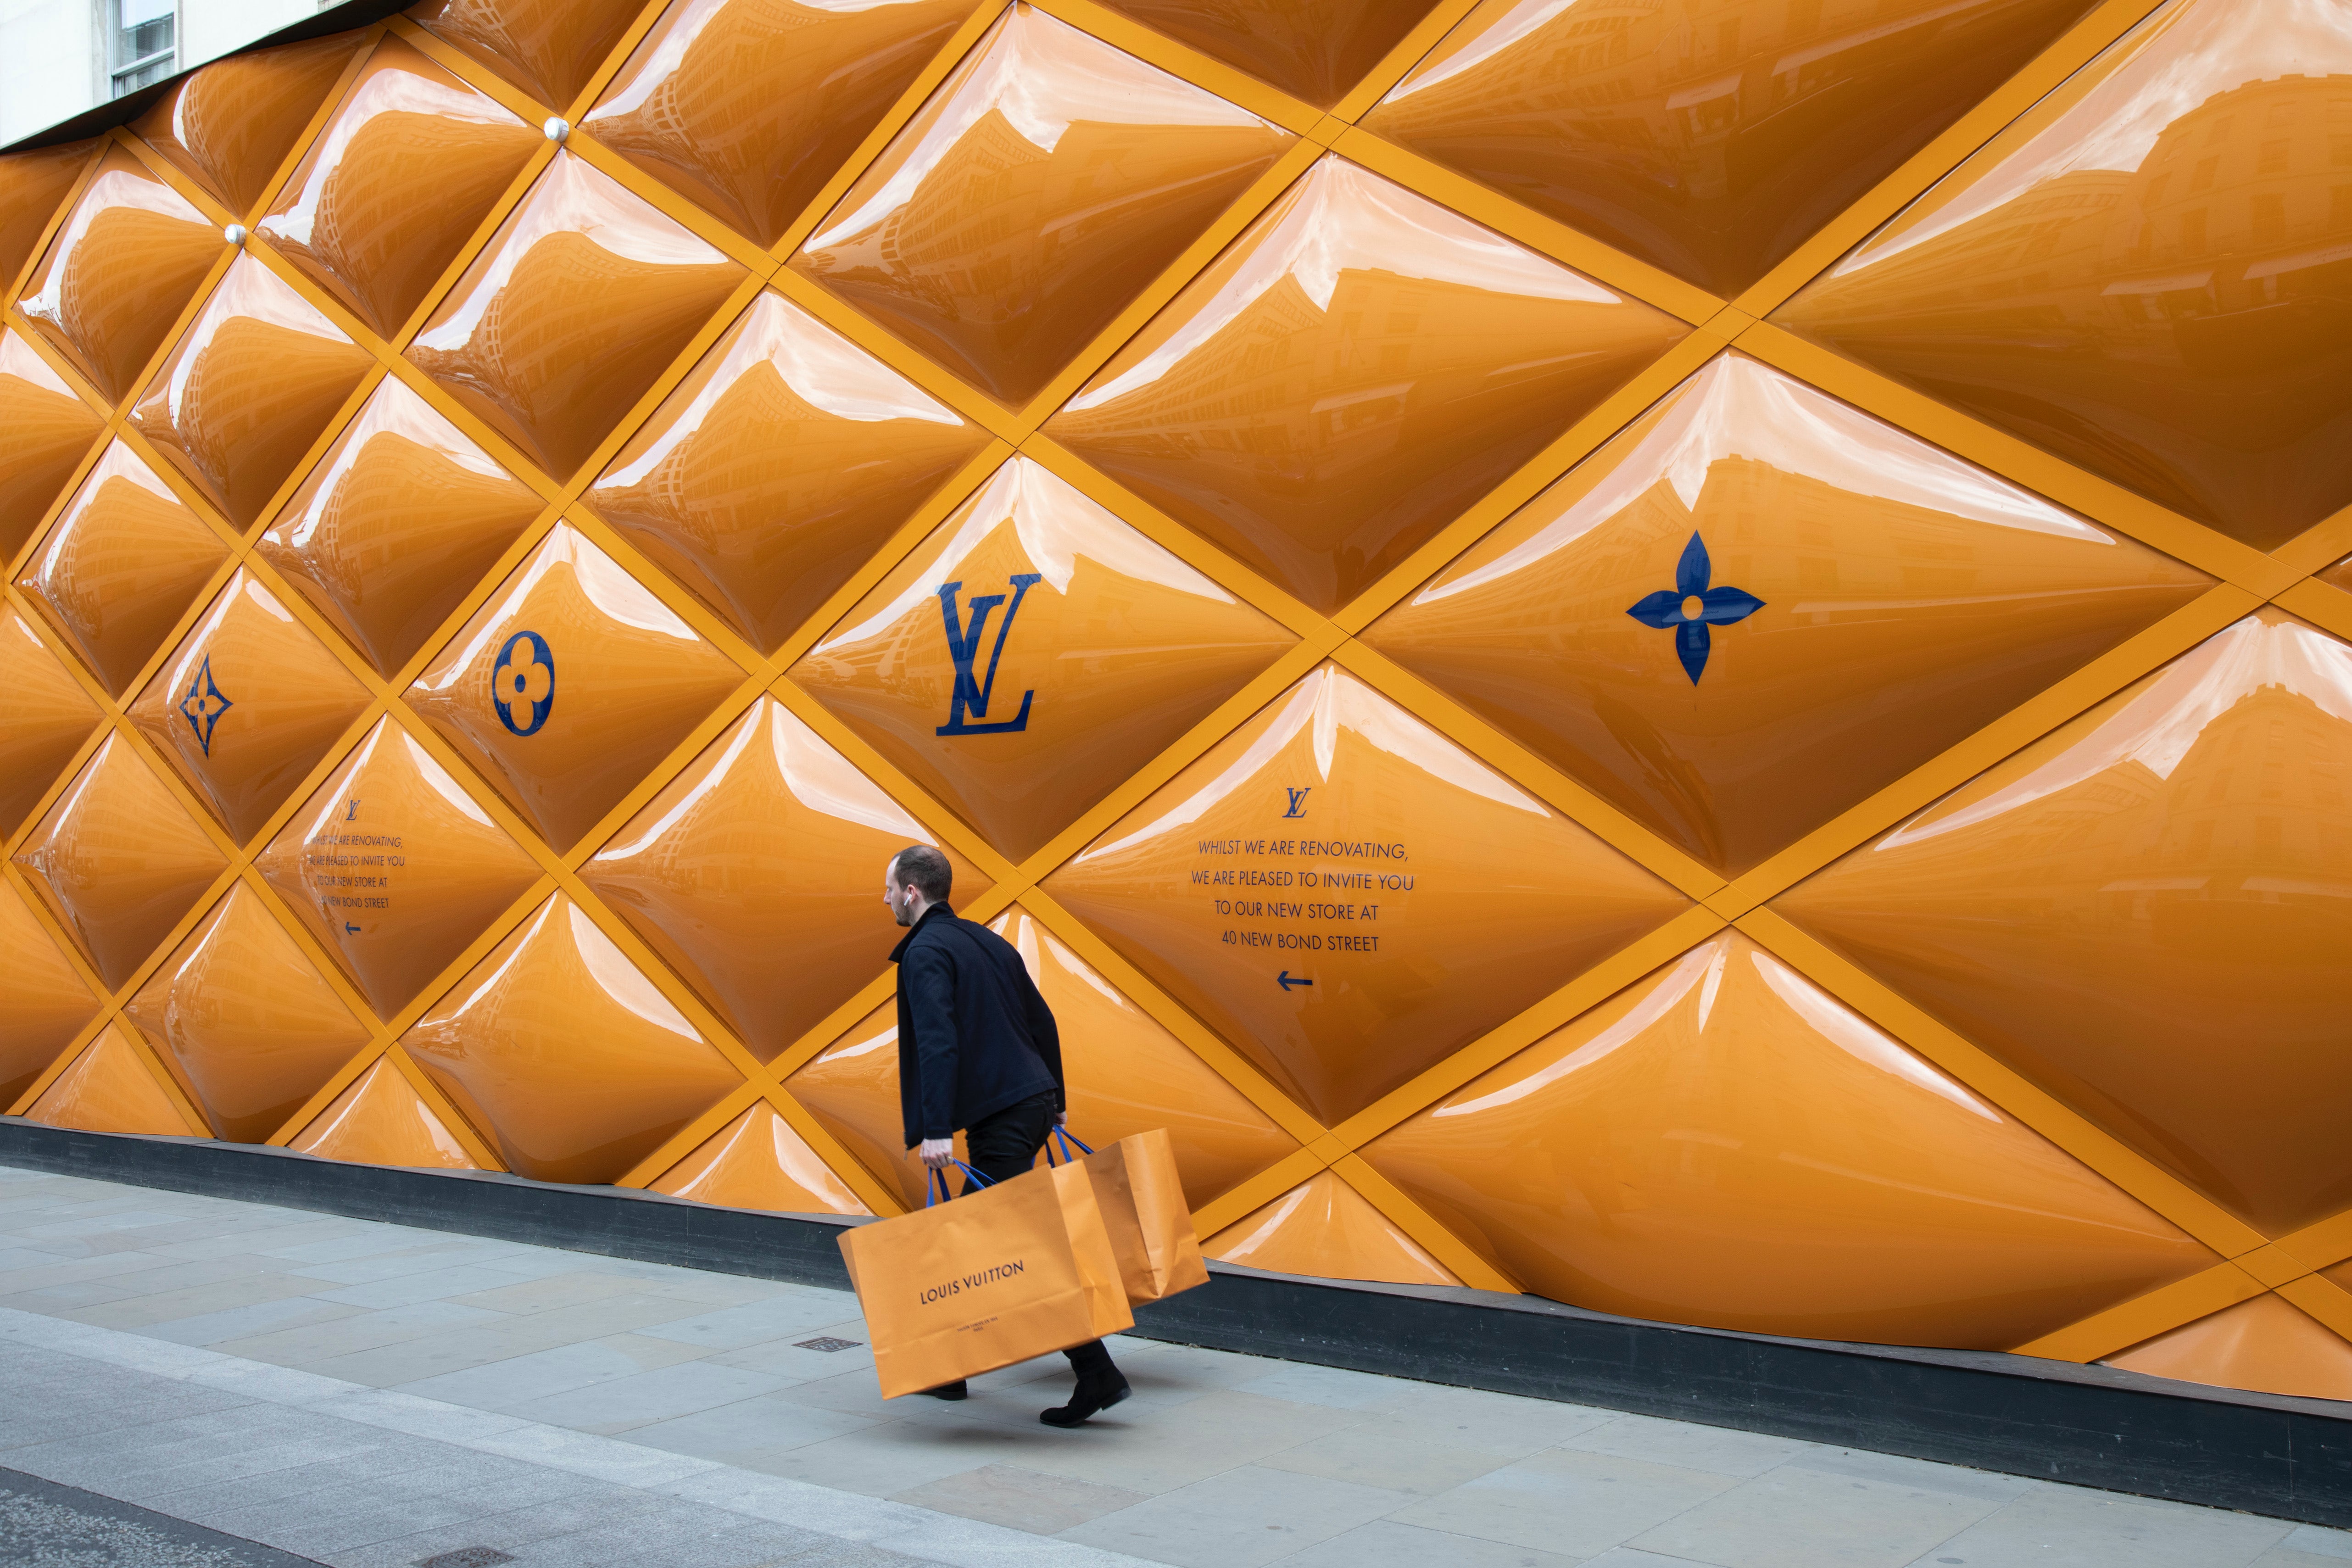 Louis Vuitton large advertising hoarding on New Bond street